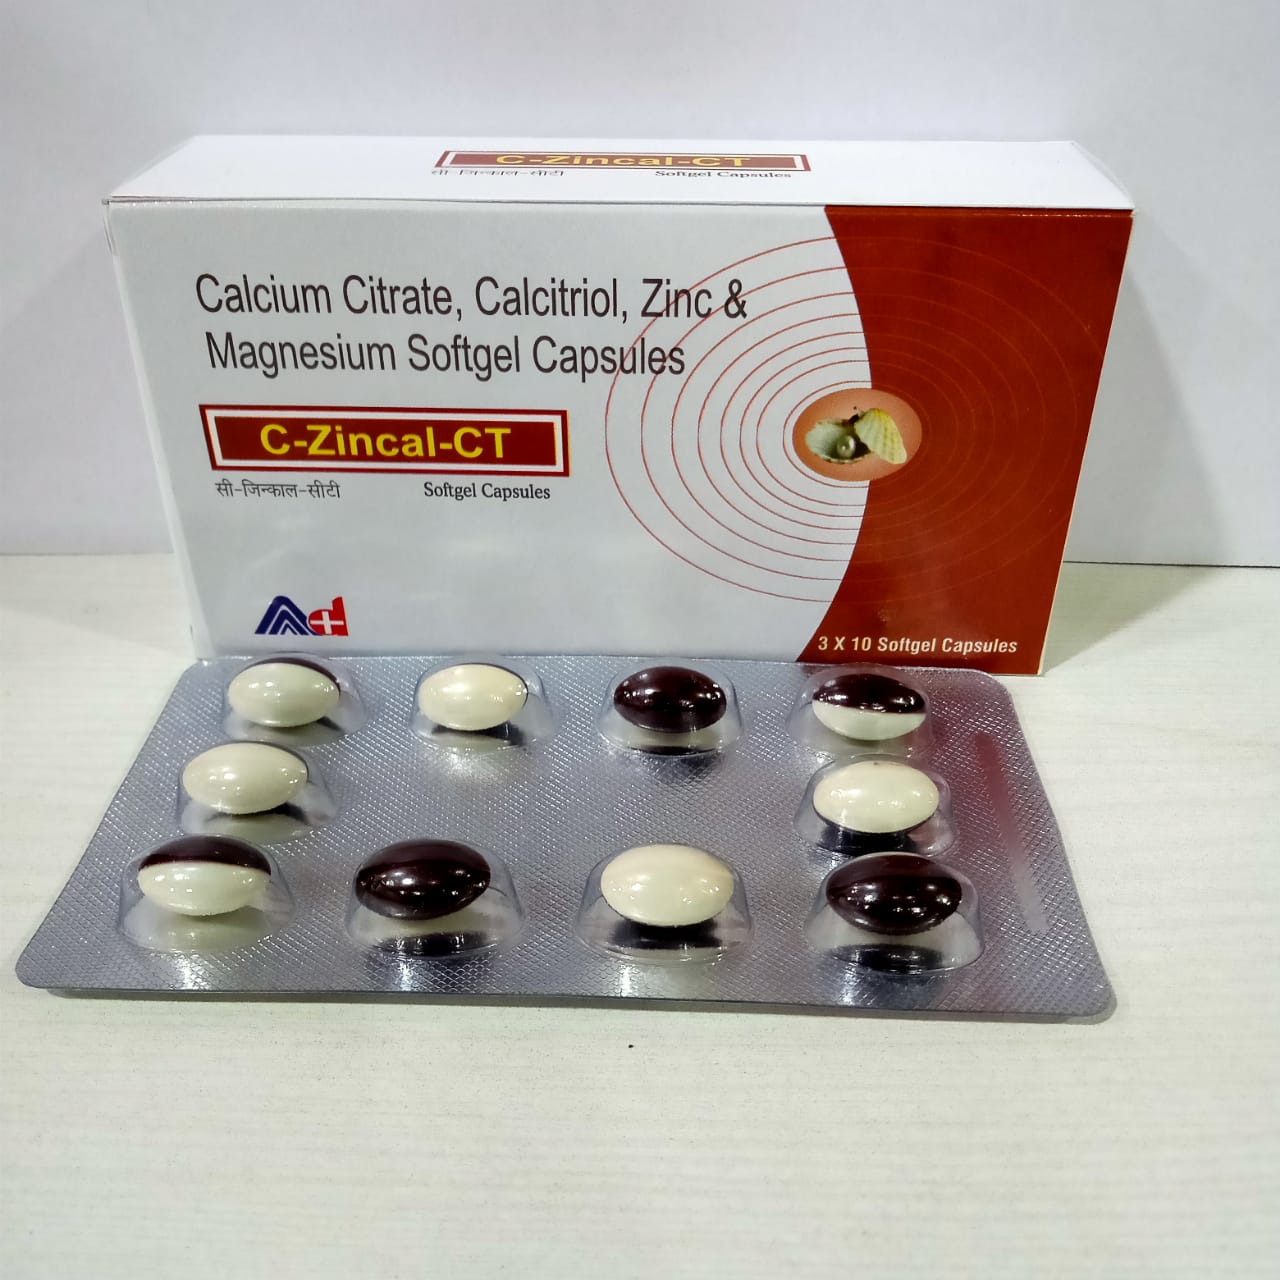 C-ZINCAL-CT Softgel Capsules